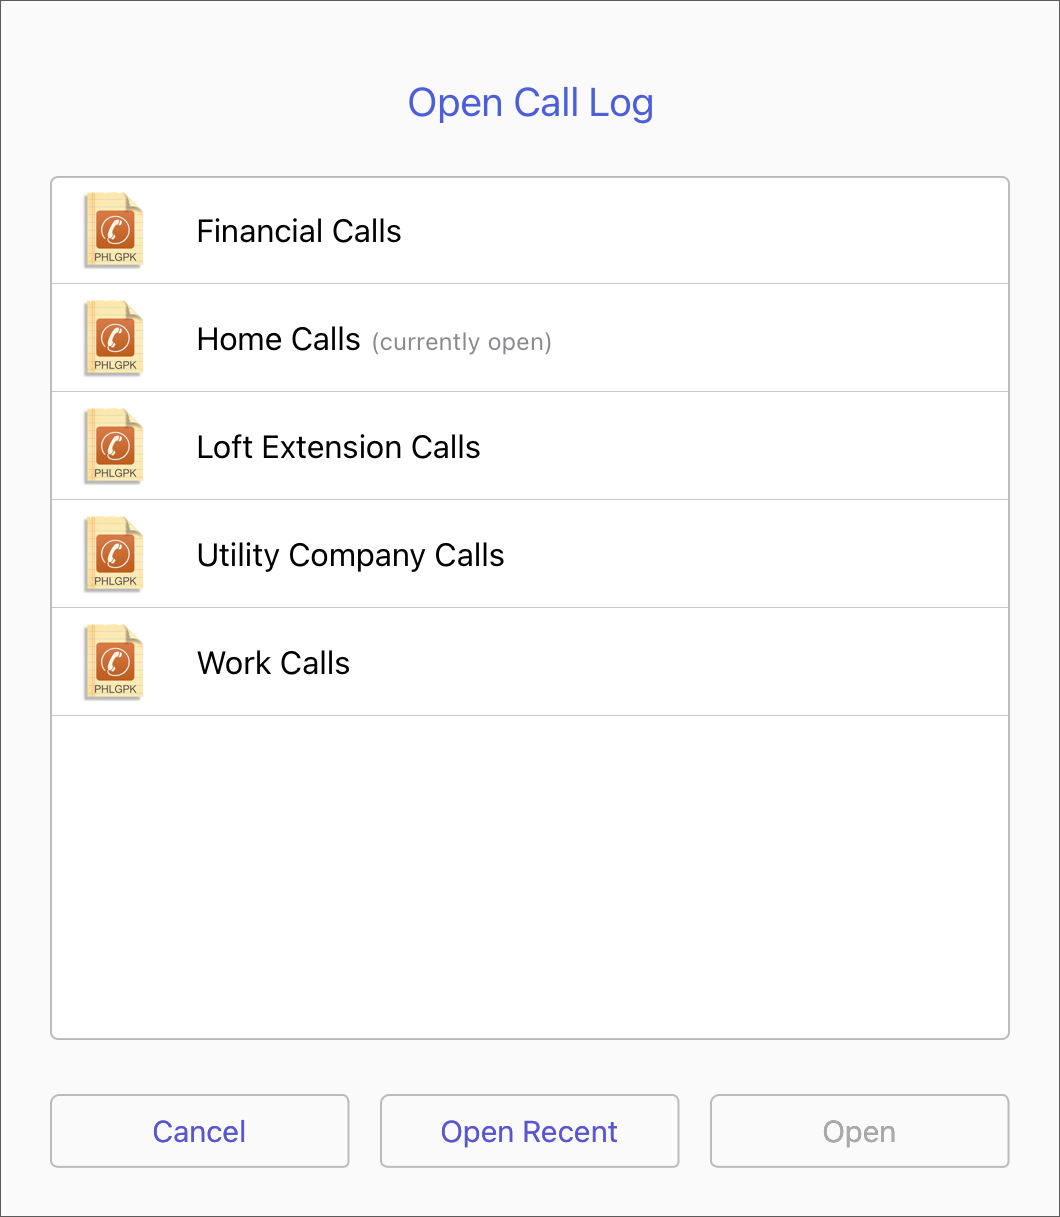 Open Call Log Screen image